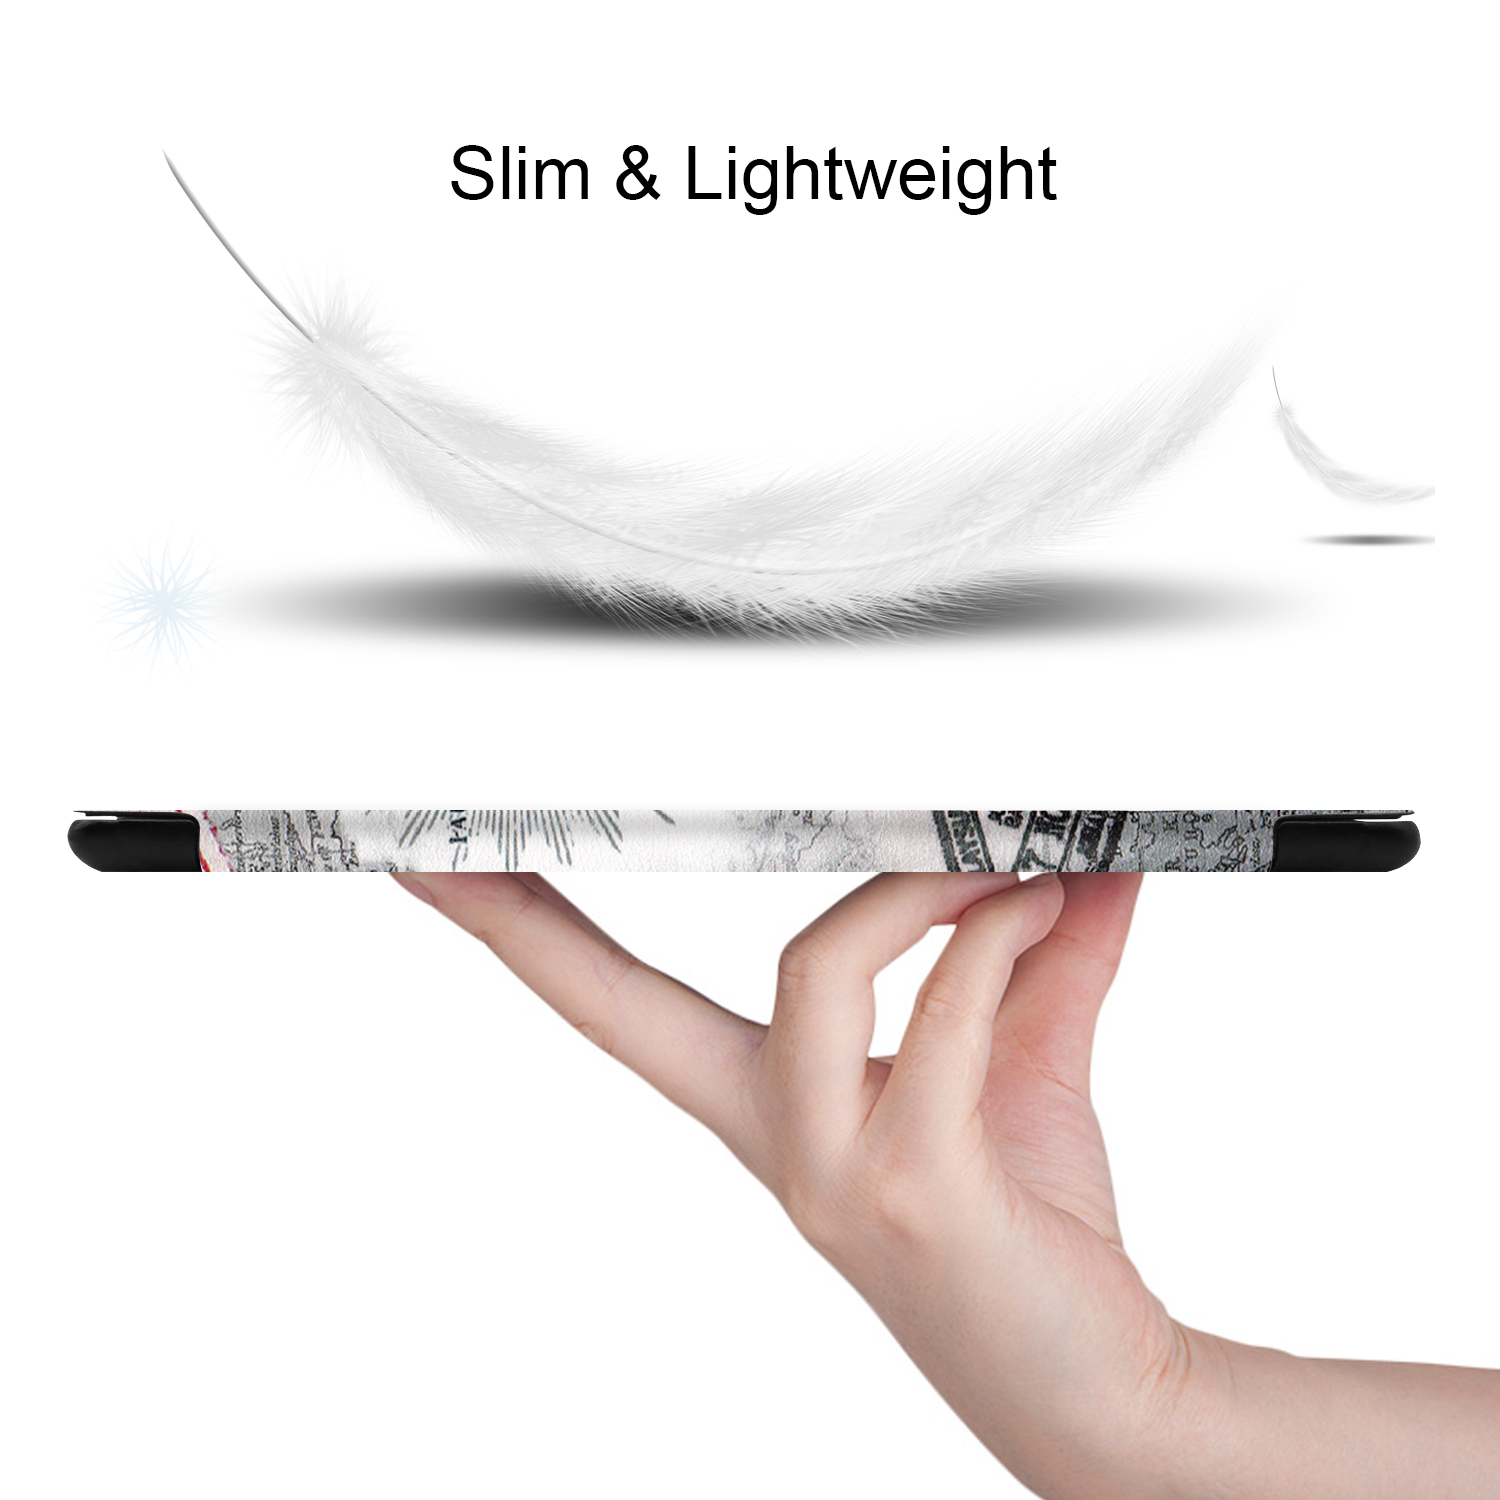 NEU Samsung Schutzhülle Kunstleder, Bookcover Hülle A SM-T510 10.1 Zoll LOBWERK 10.1 Galaxy für Tab